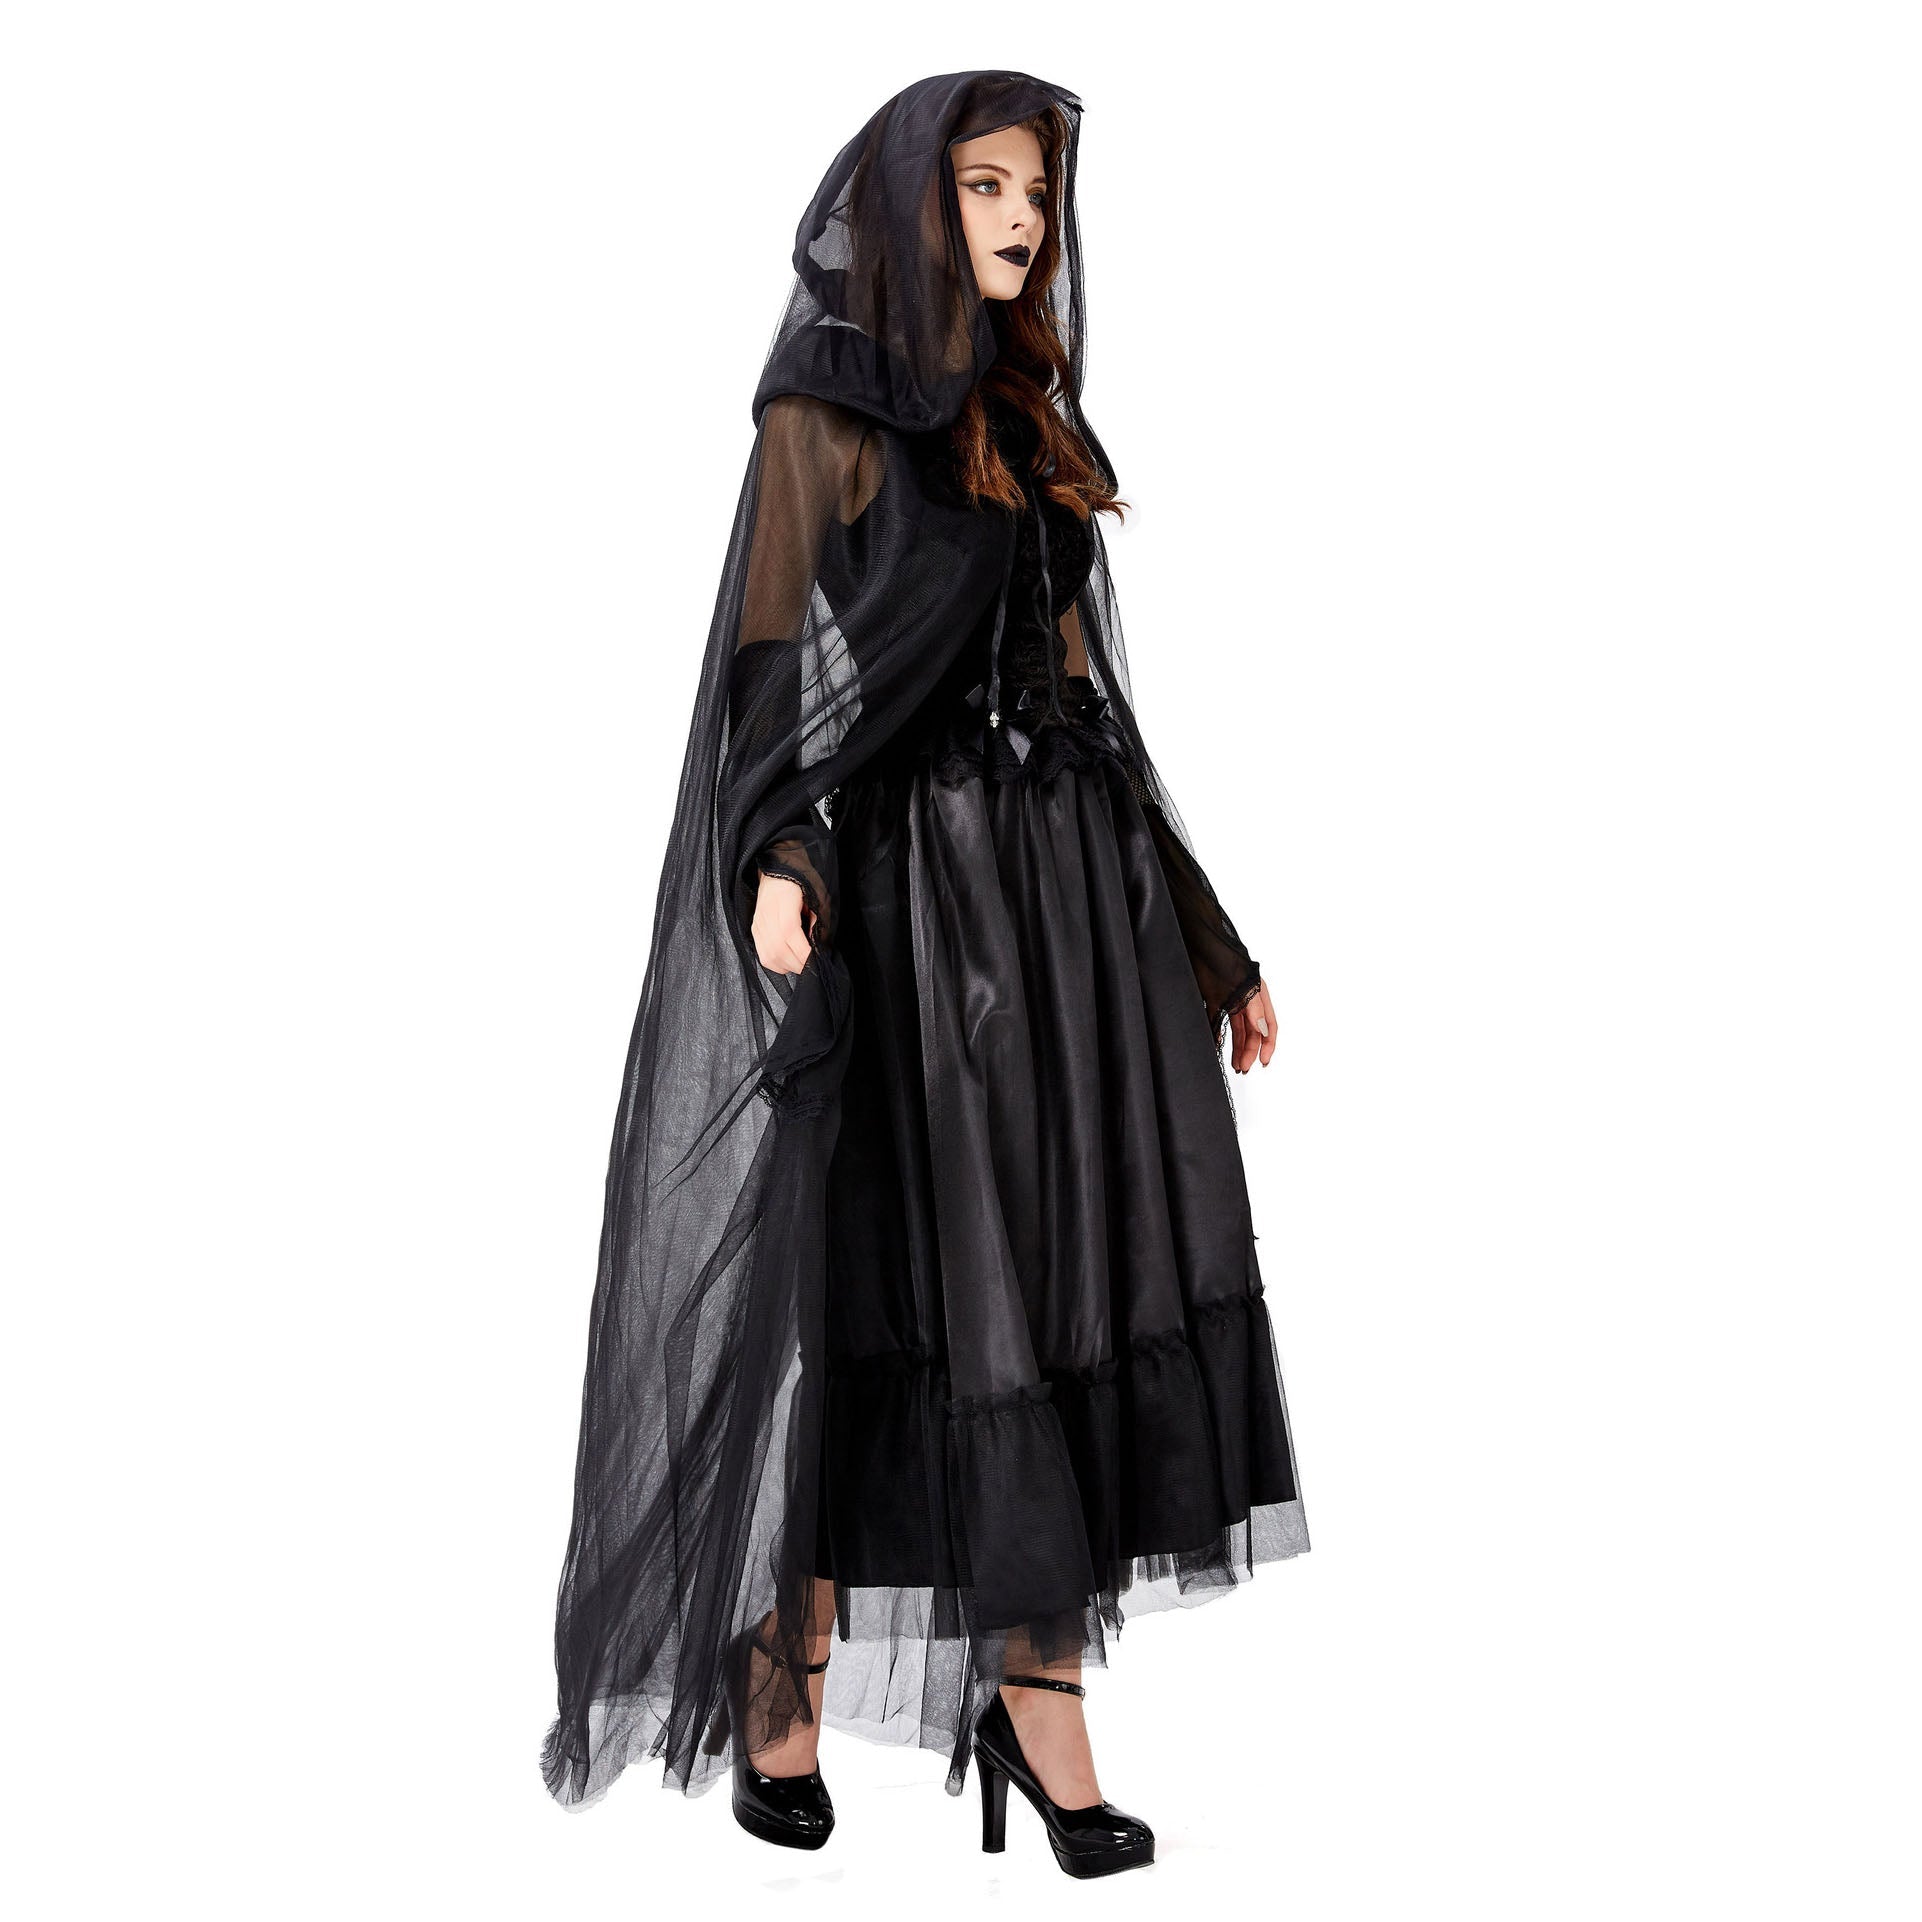 Adult Women's Black Vampire Witch Ghost Bride Halloween Cosplay Costume Dress